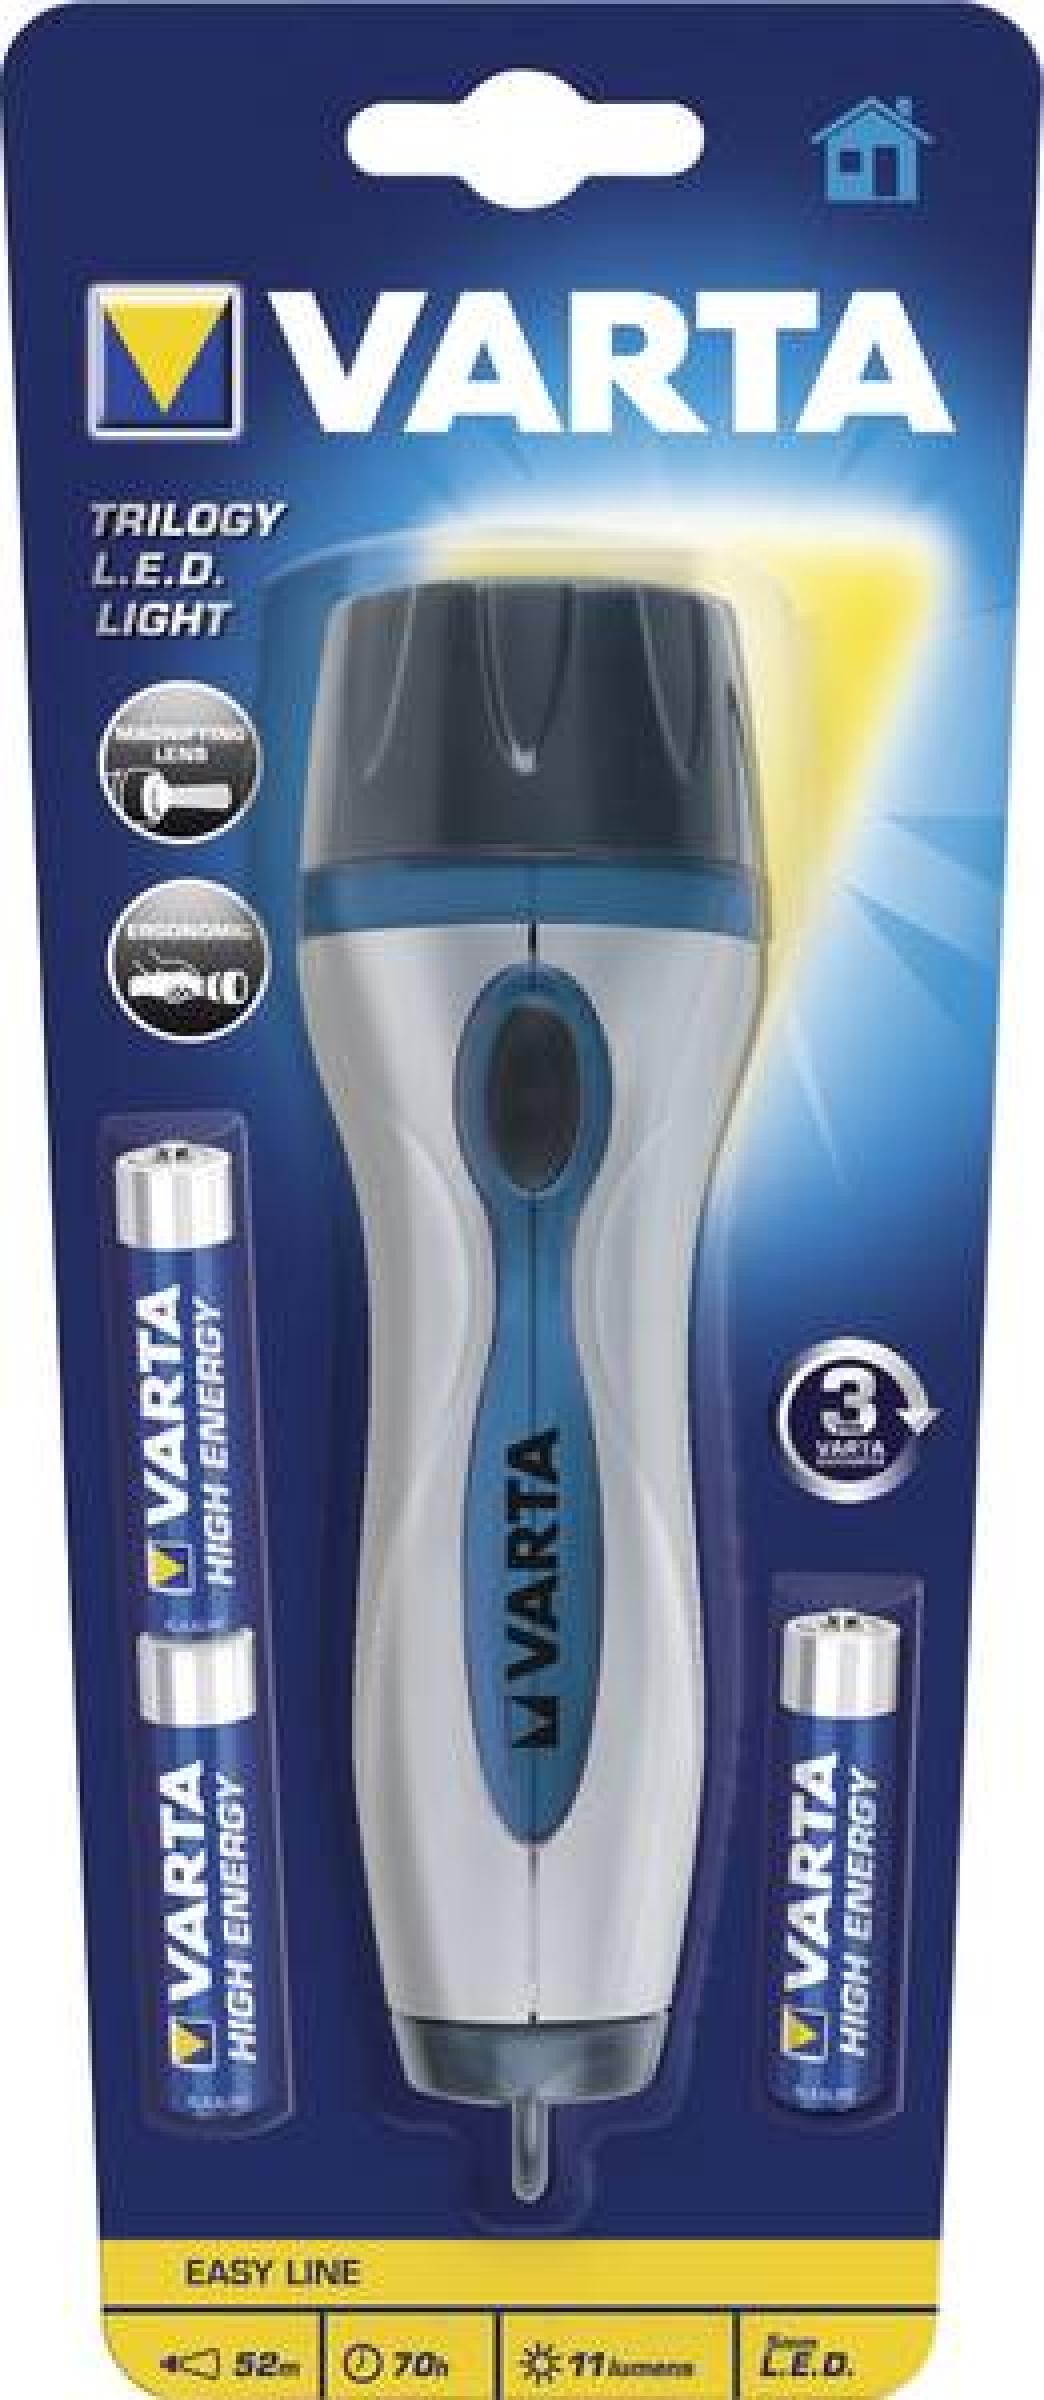 Varta Trilogy LED Light 3AAA inkl. Batterien